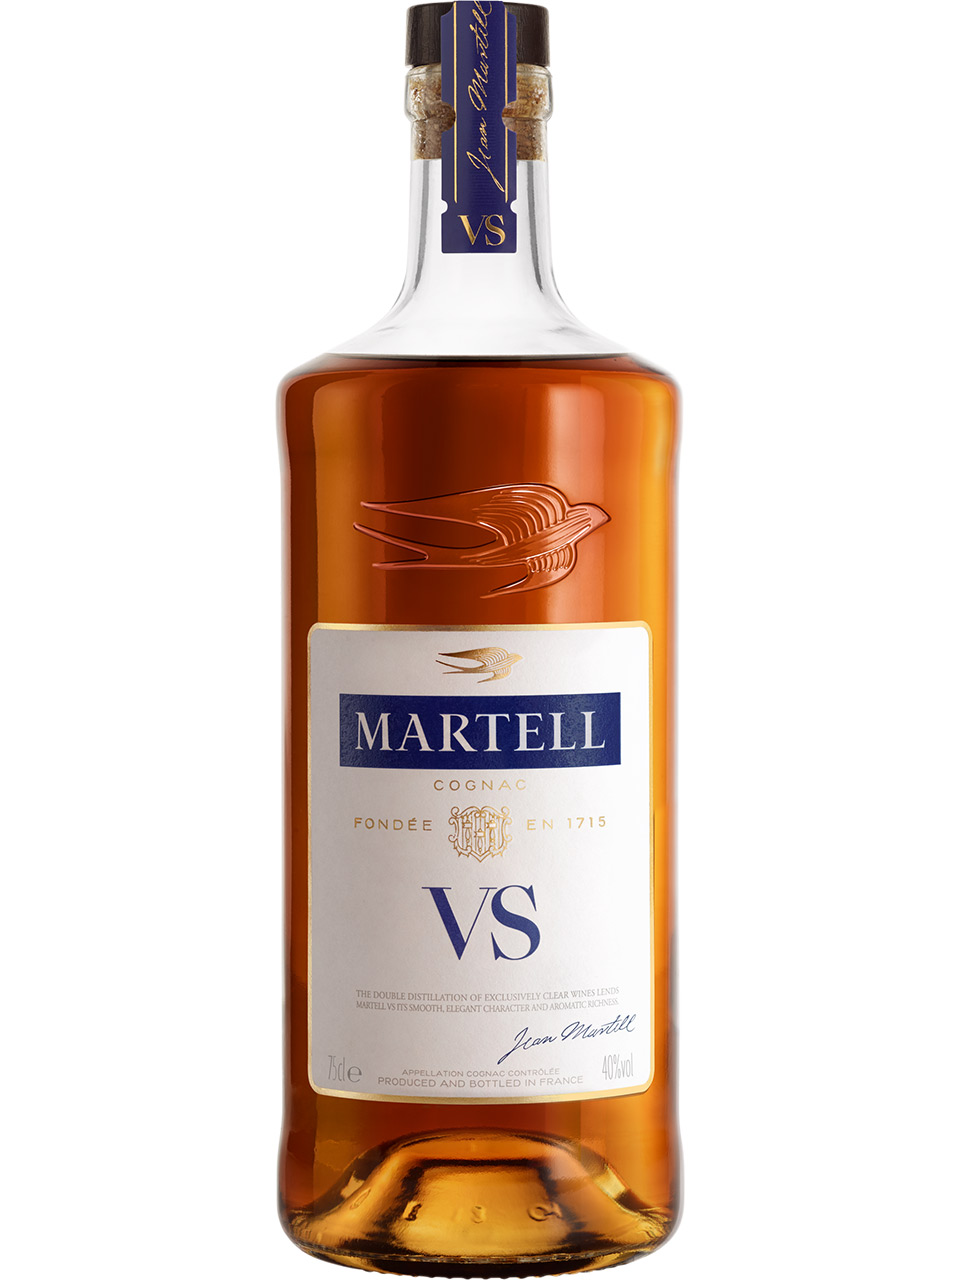 Martell VS Single Distillery Fine Cognac